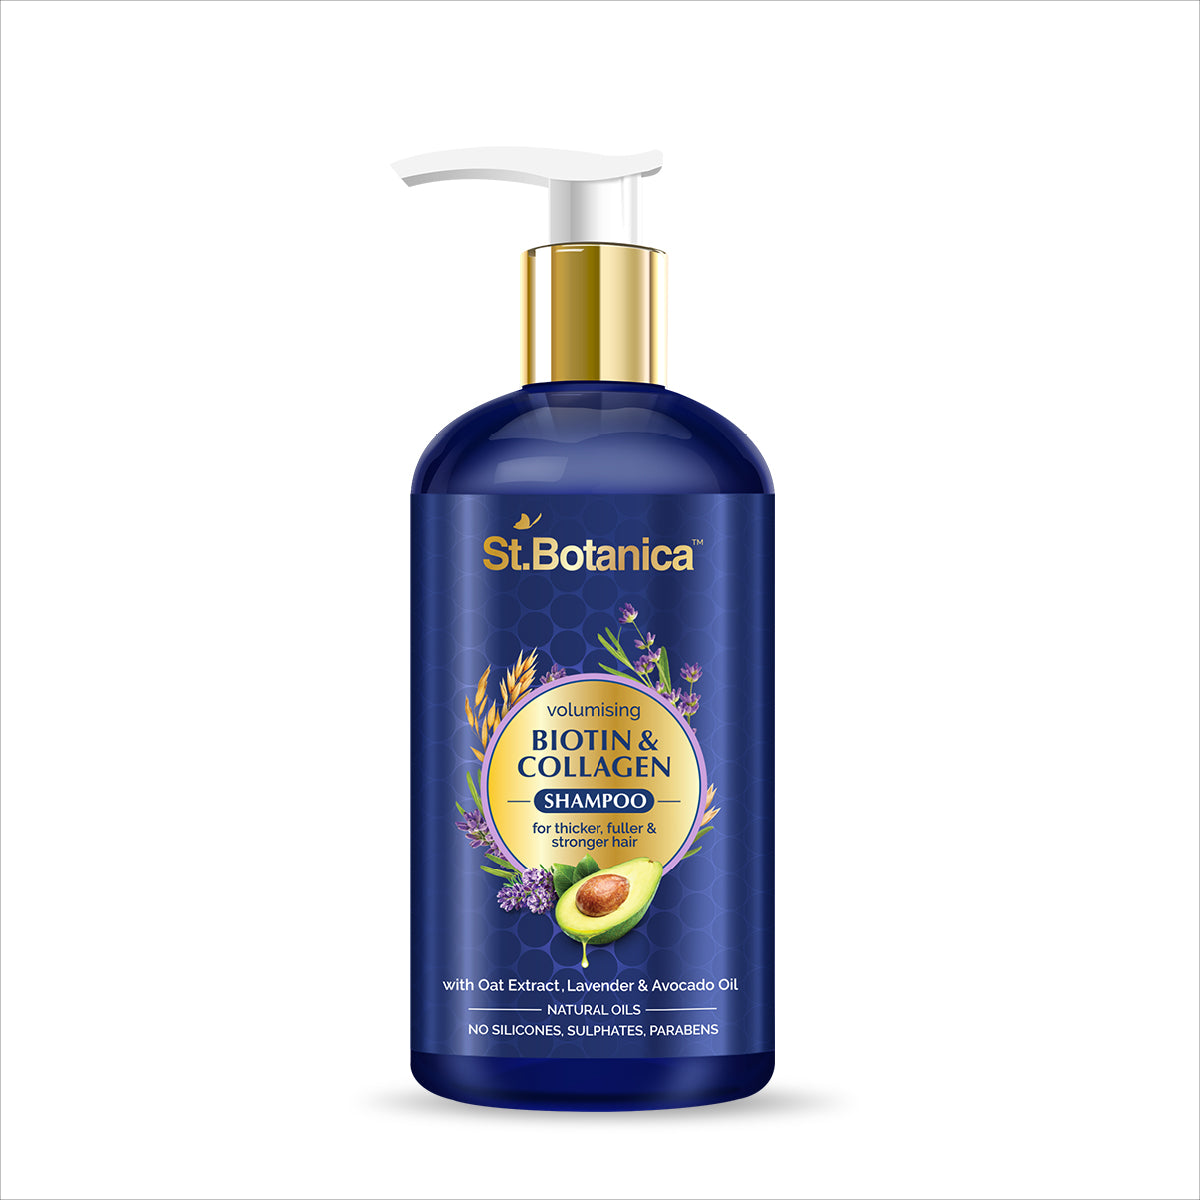 St.Botanica Biotin & Collagen Volumizing Hair Shampoo - 300ml - No Sulphate, No Parabens, No Silicon